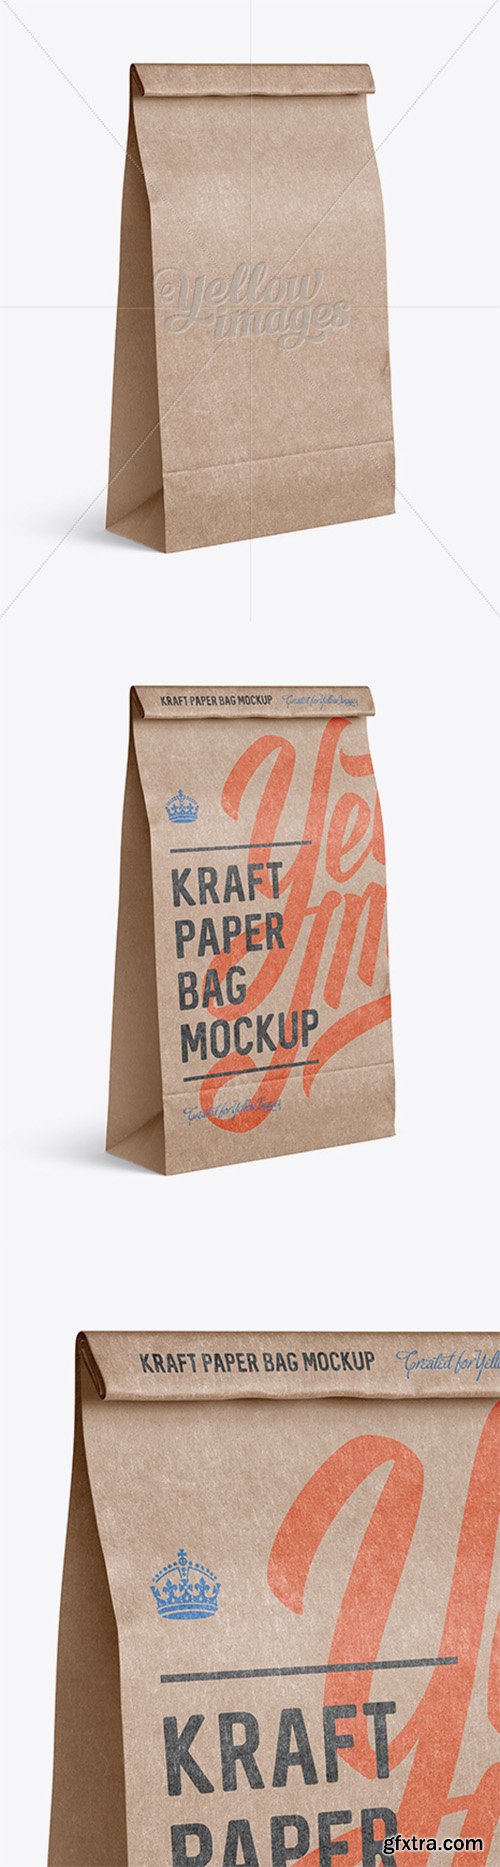 Kraft Paper Food/Snack Bag Mockup - Halfside View 16918